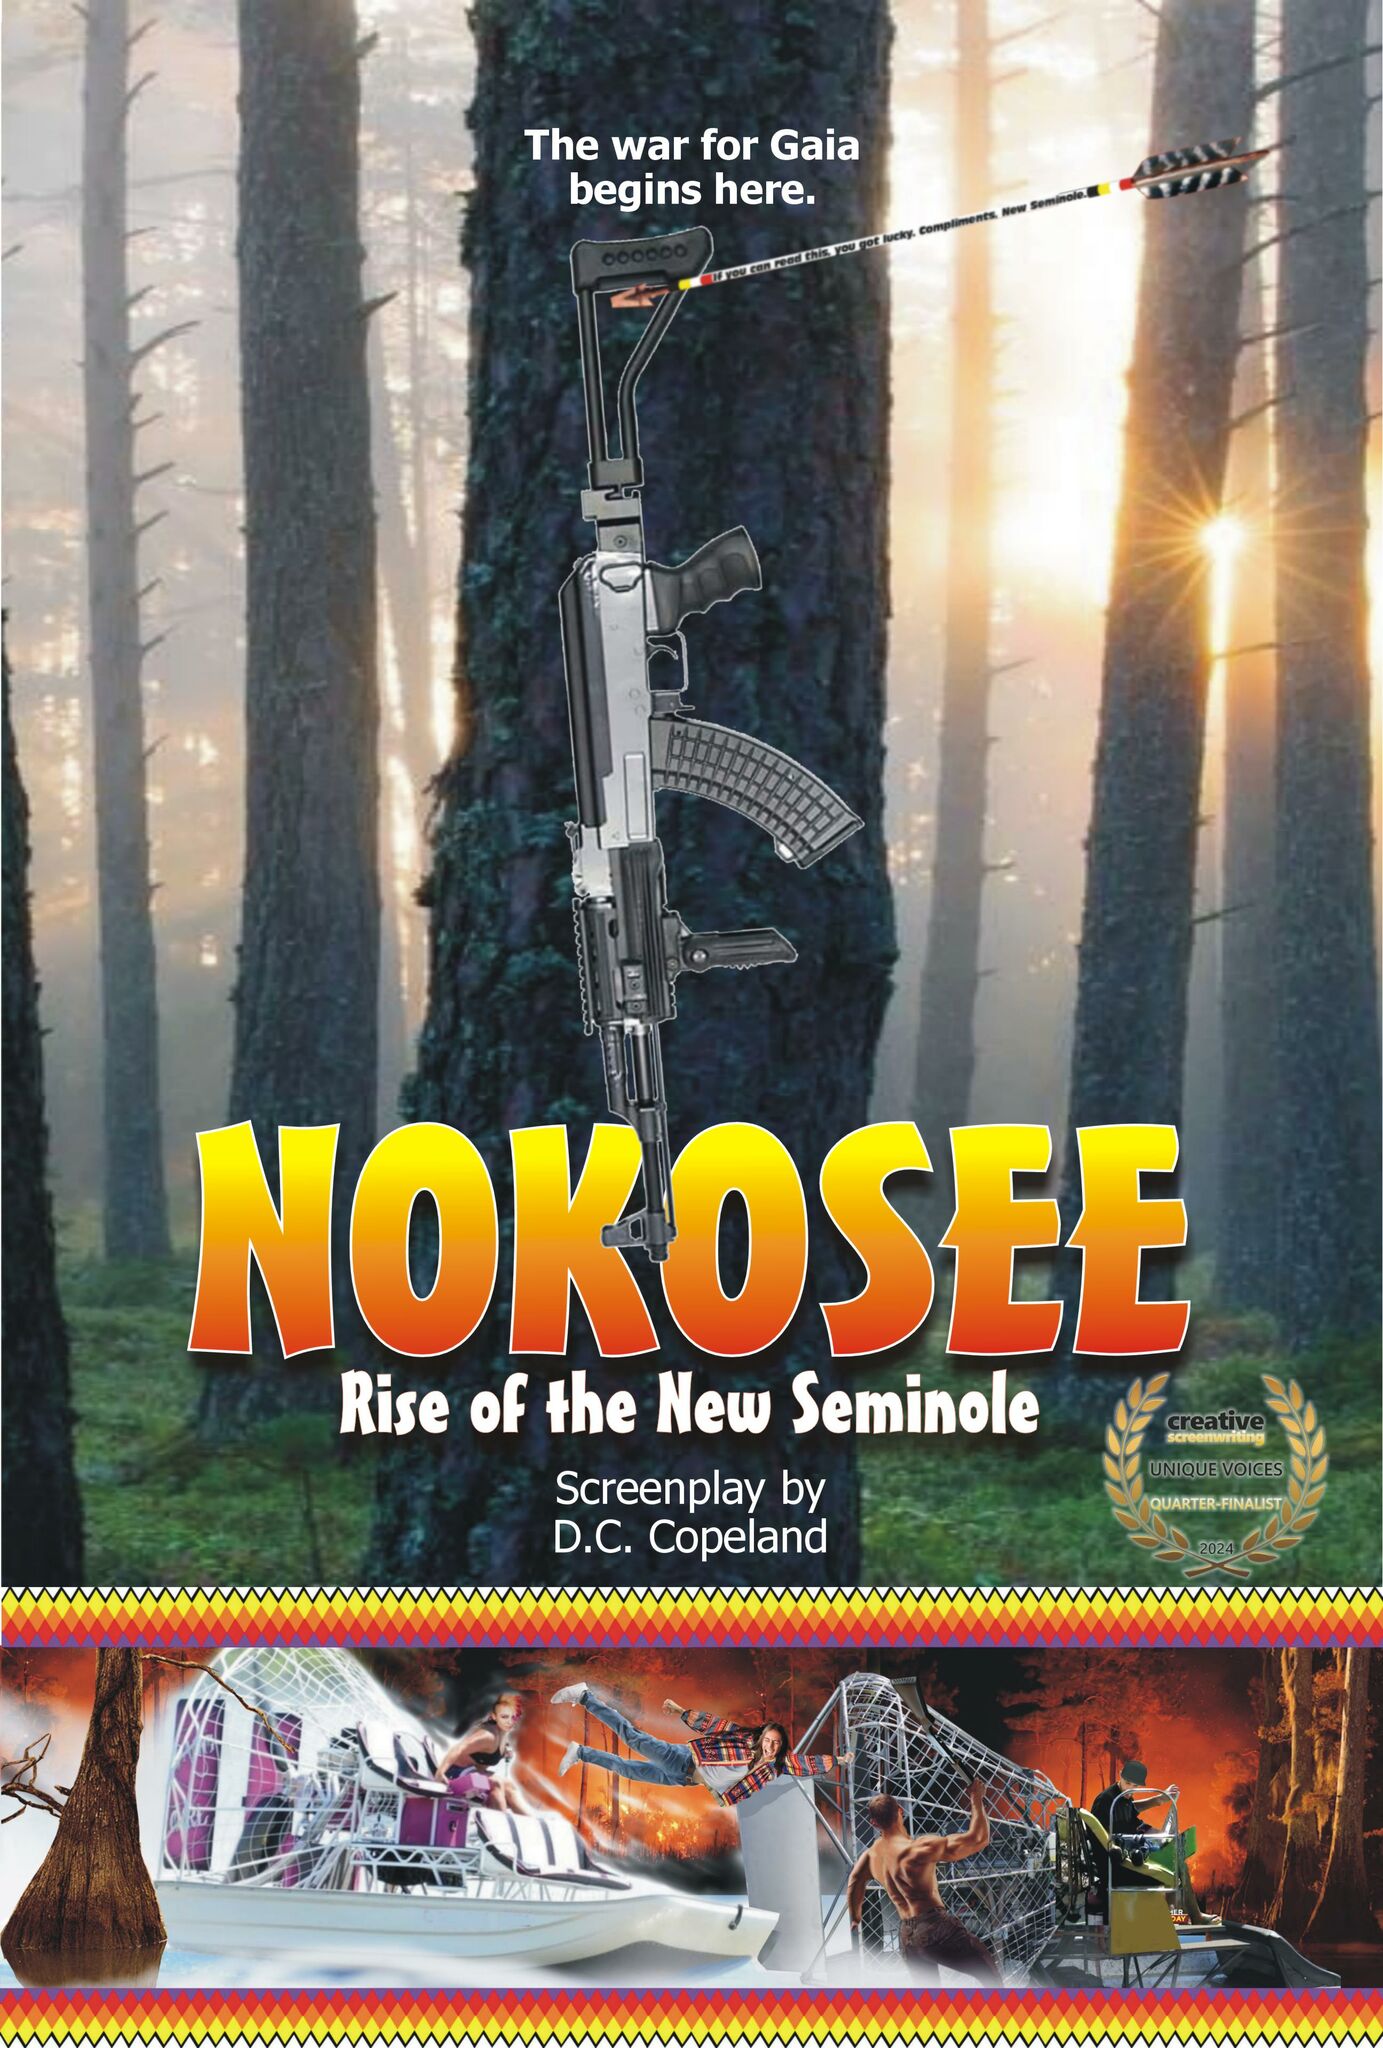 NOKOSEE: RISE OF THE NEW SEMINOLE